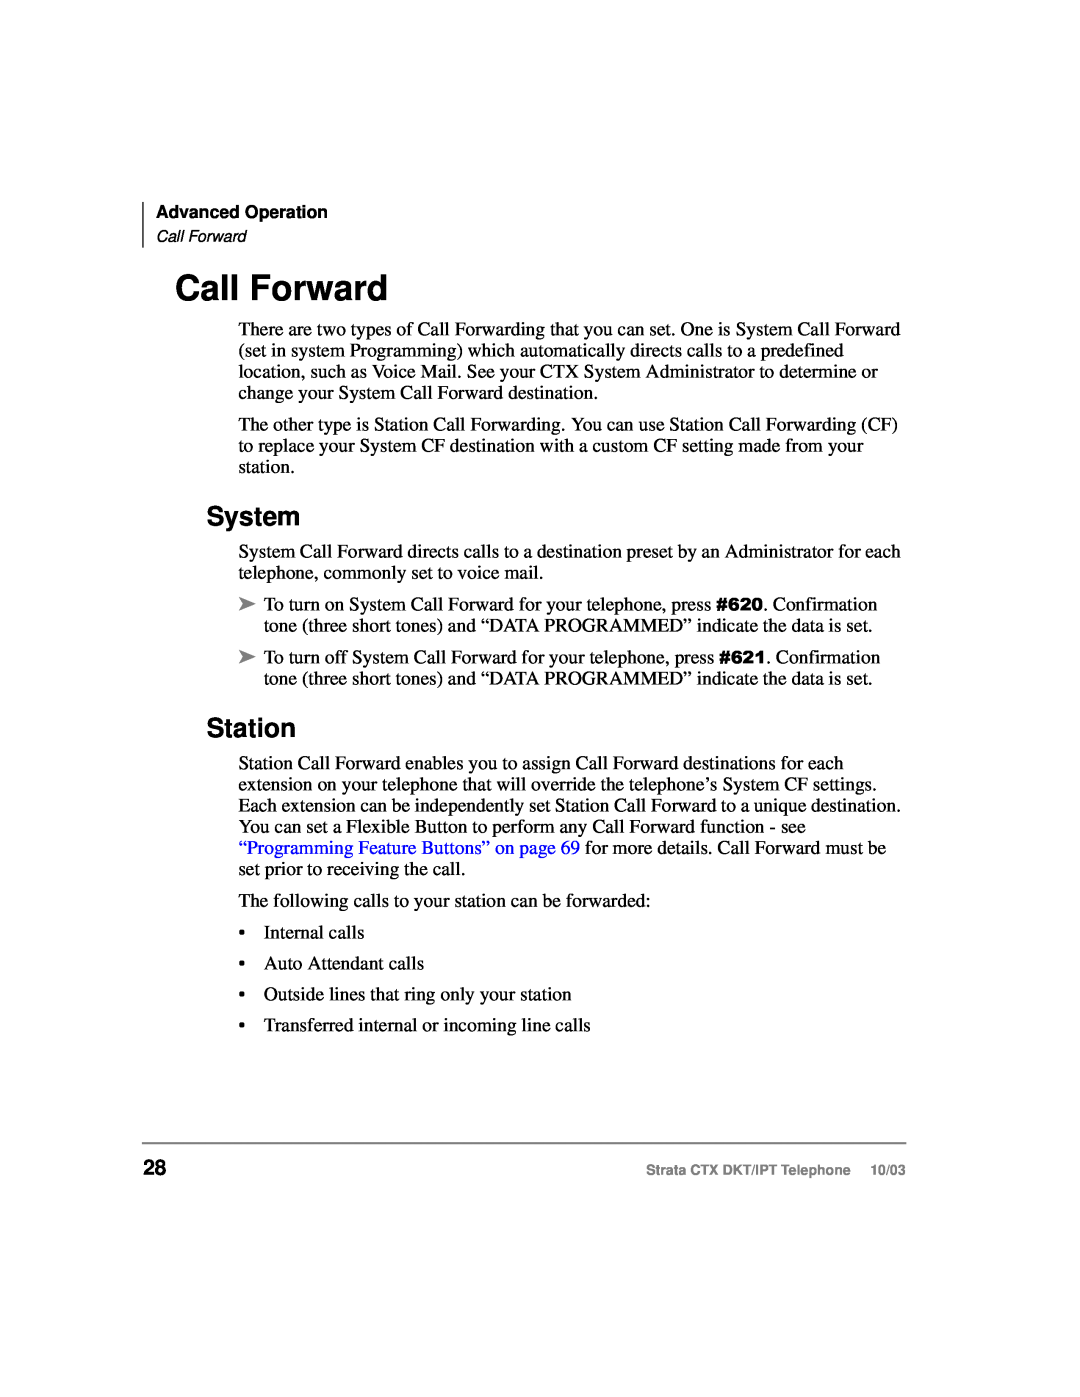 Toshiba IPT, DKT manual Call Forward, System, Station 